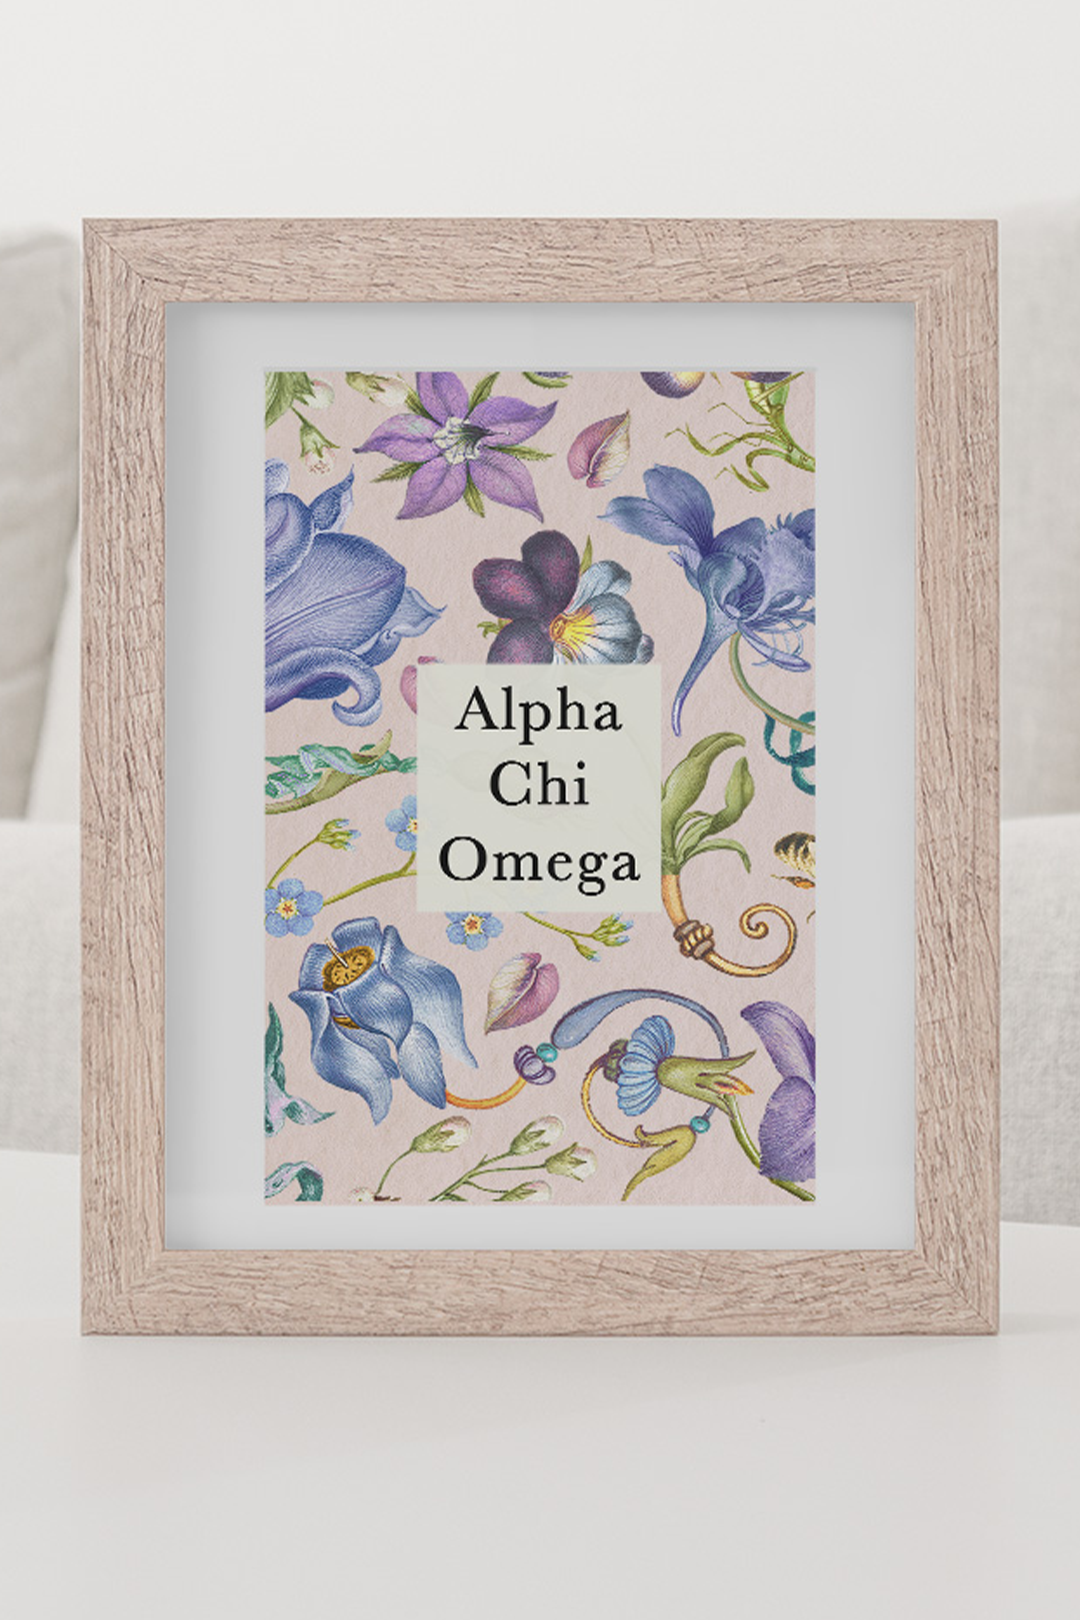 Alpha Chi Omega Art Print #1 - 8.5x11 - Spikes and Seams Greek